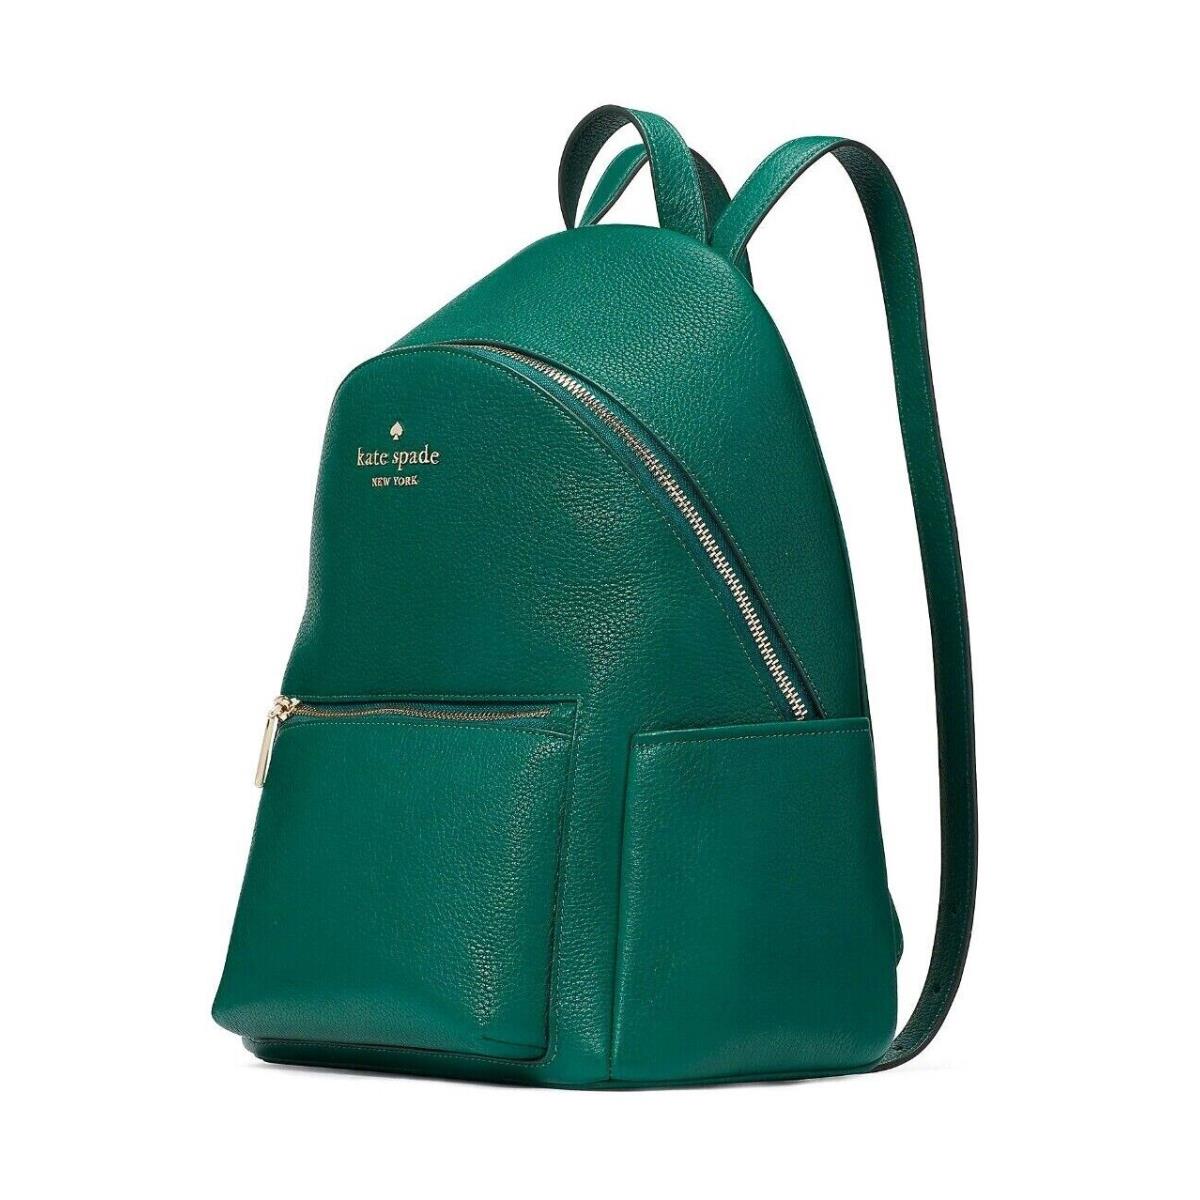 Kate Spade New York Leila Dome Leather Medium Backpack Shoulder Bag Purse